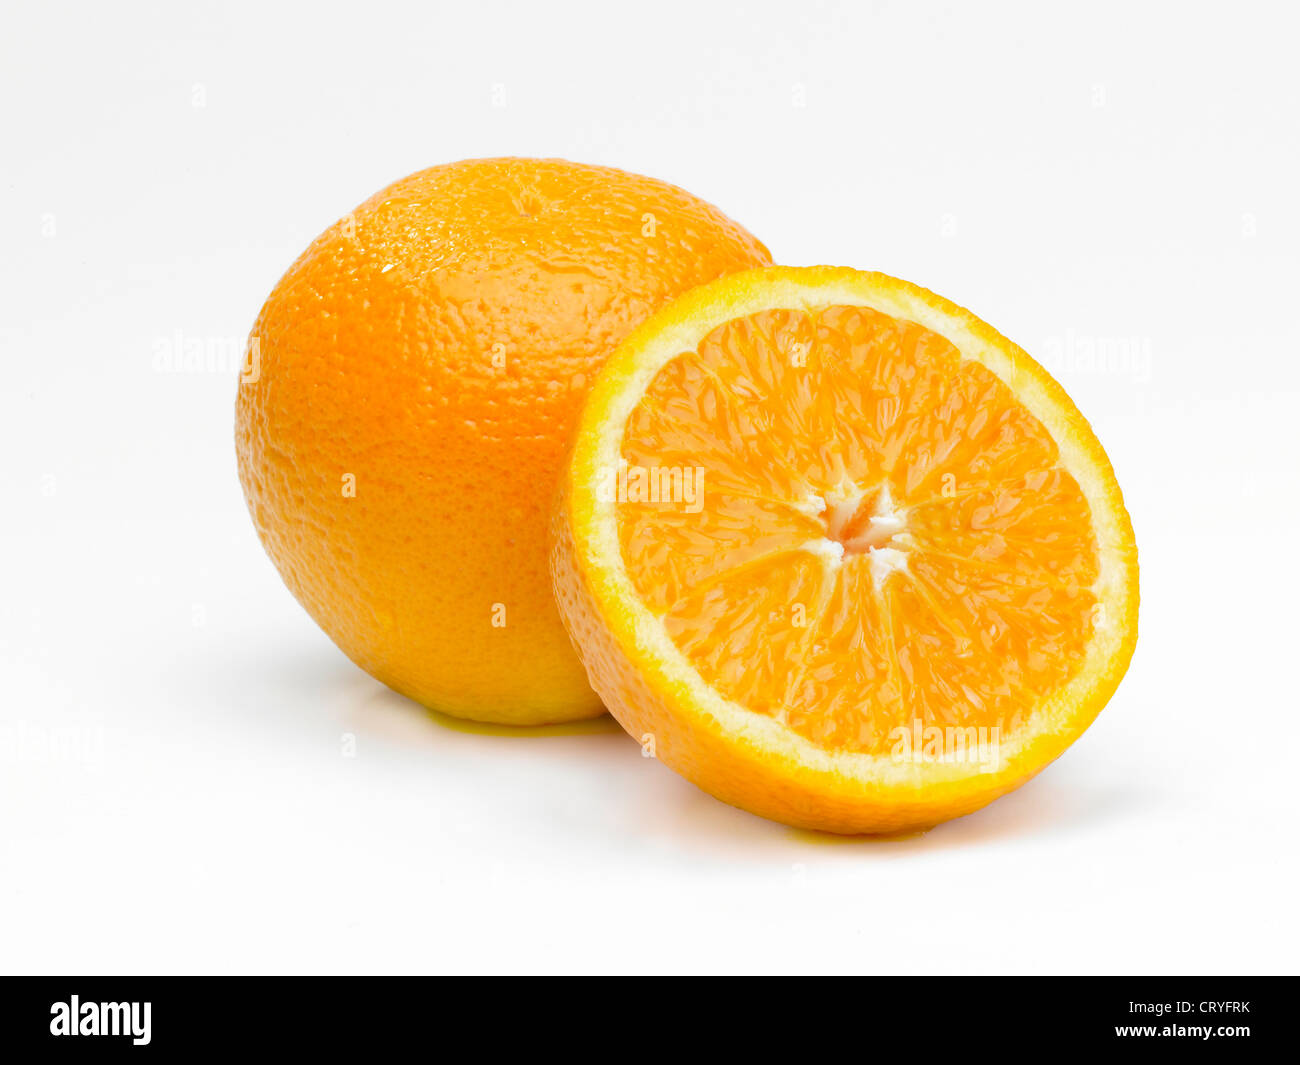 A whole and sliced half orange arrangement Stock Photo